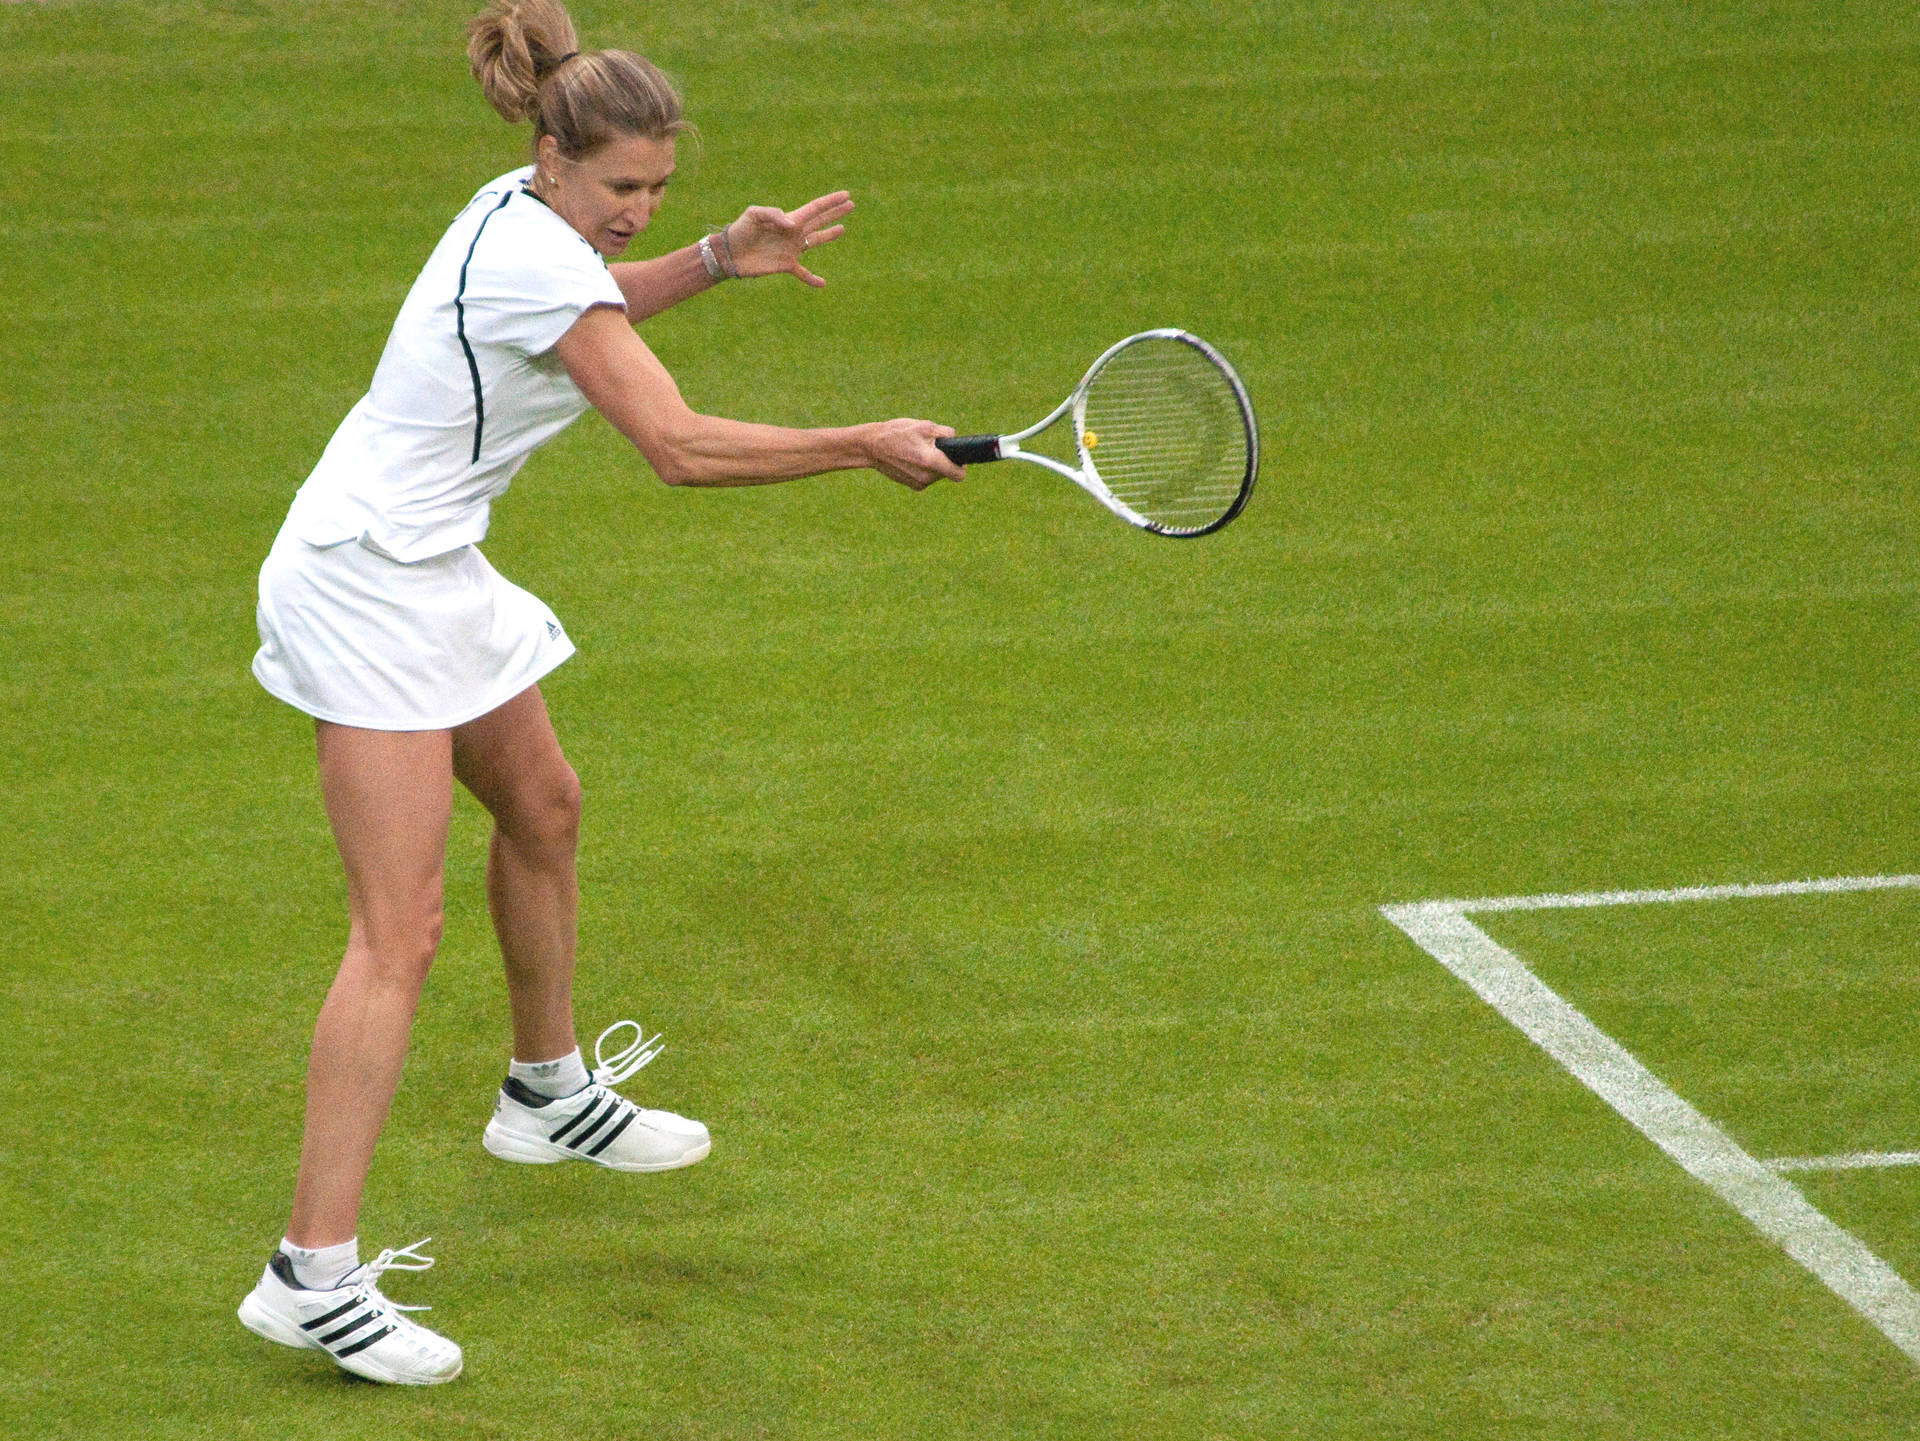 Steffi Graf in action on the tennis court Wallpaper